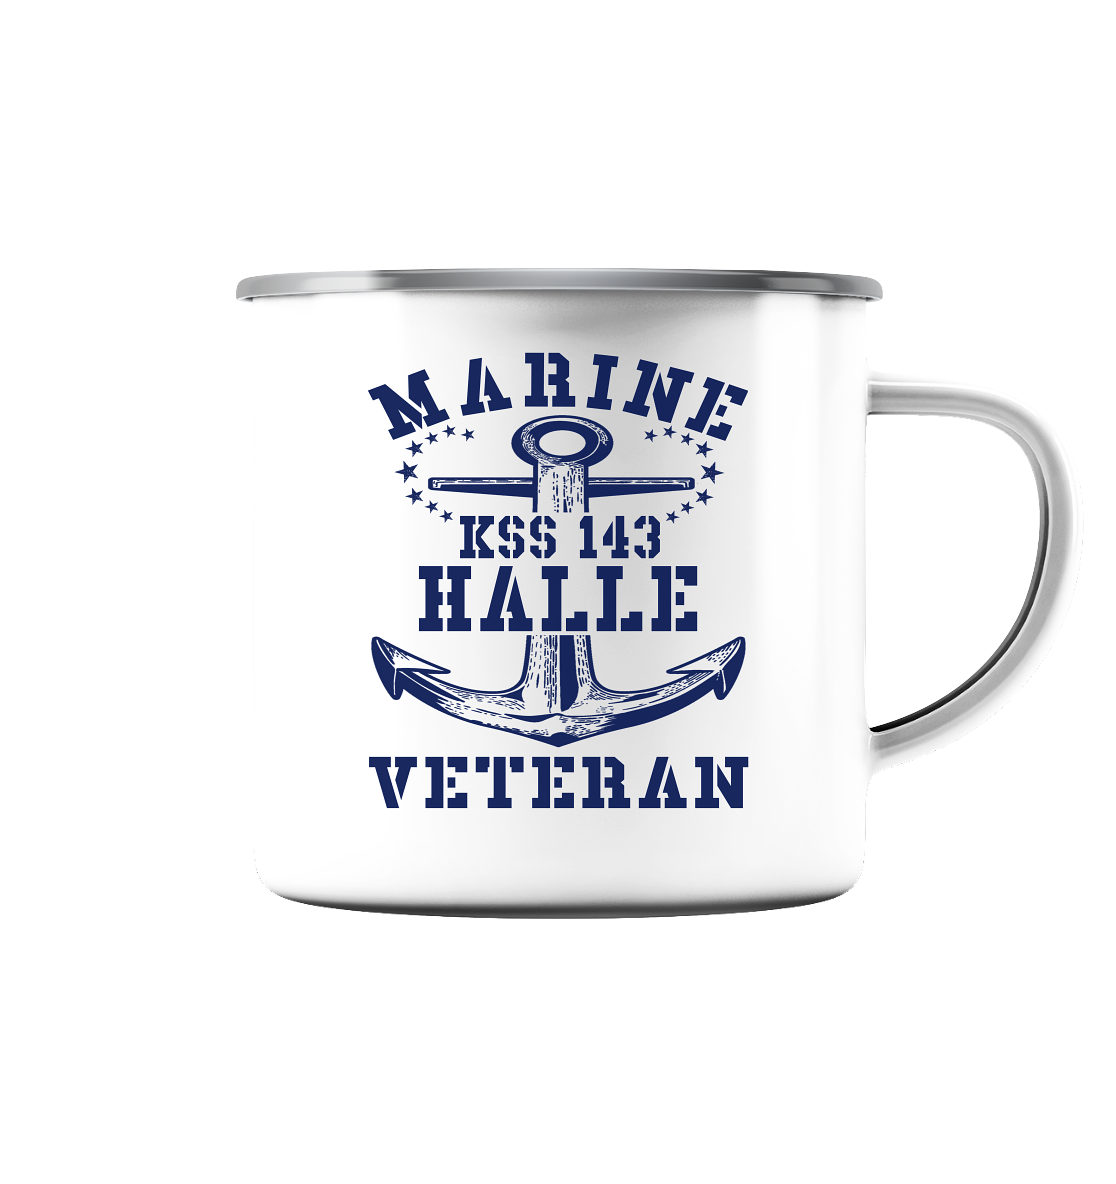 KSS 143 HALLE Marine Veteran - Emaille Tasse (Silber)